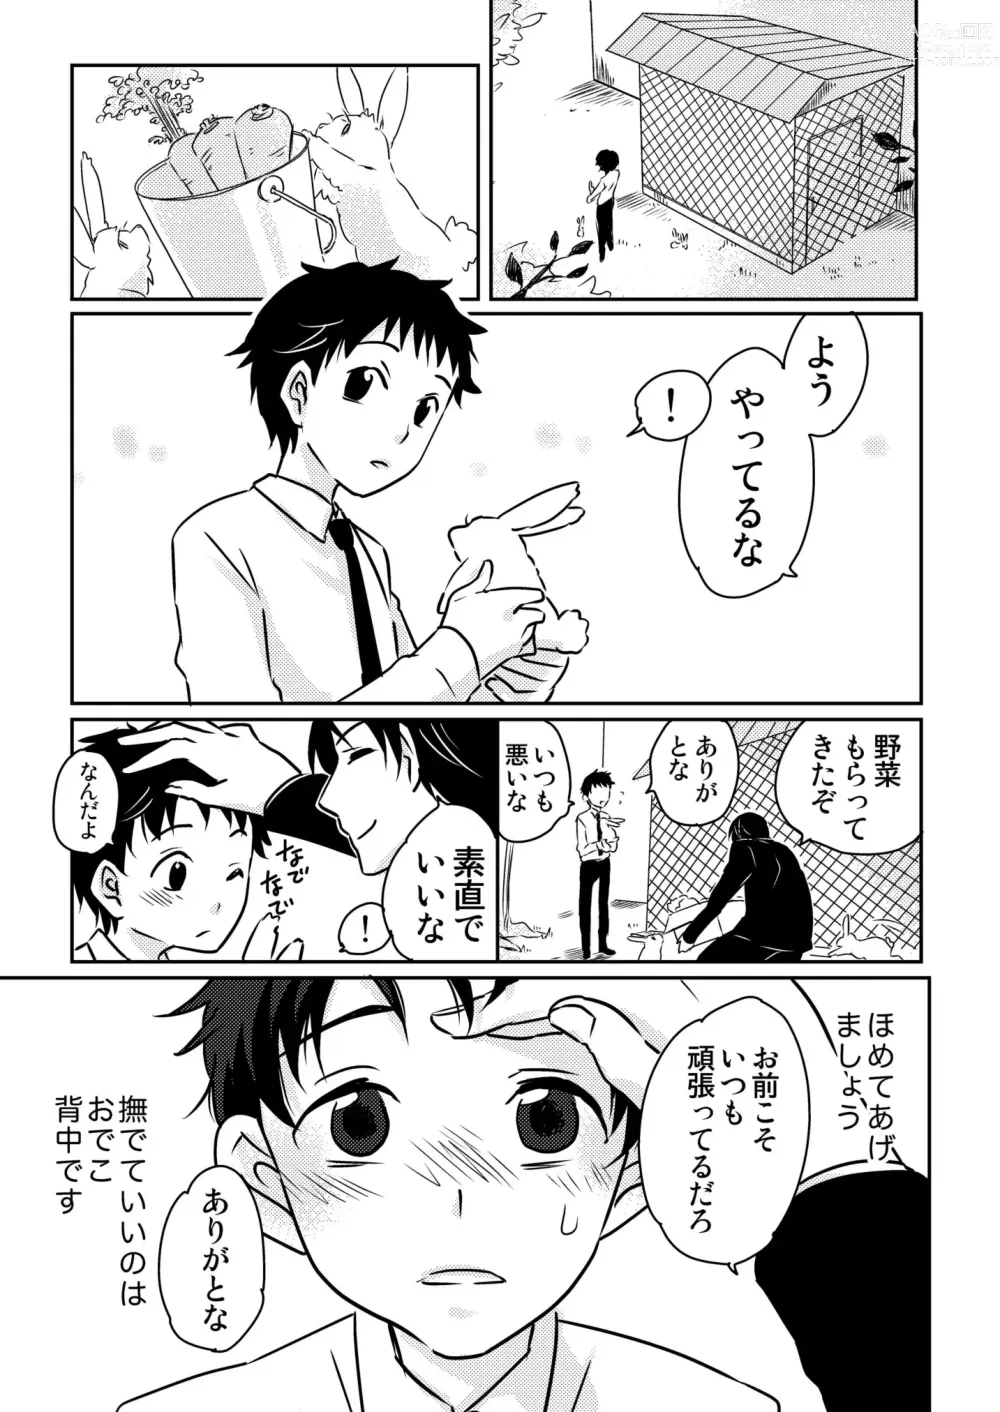 Page 7 of doujinshi Usagi no Koe 3